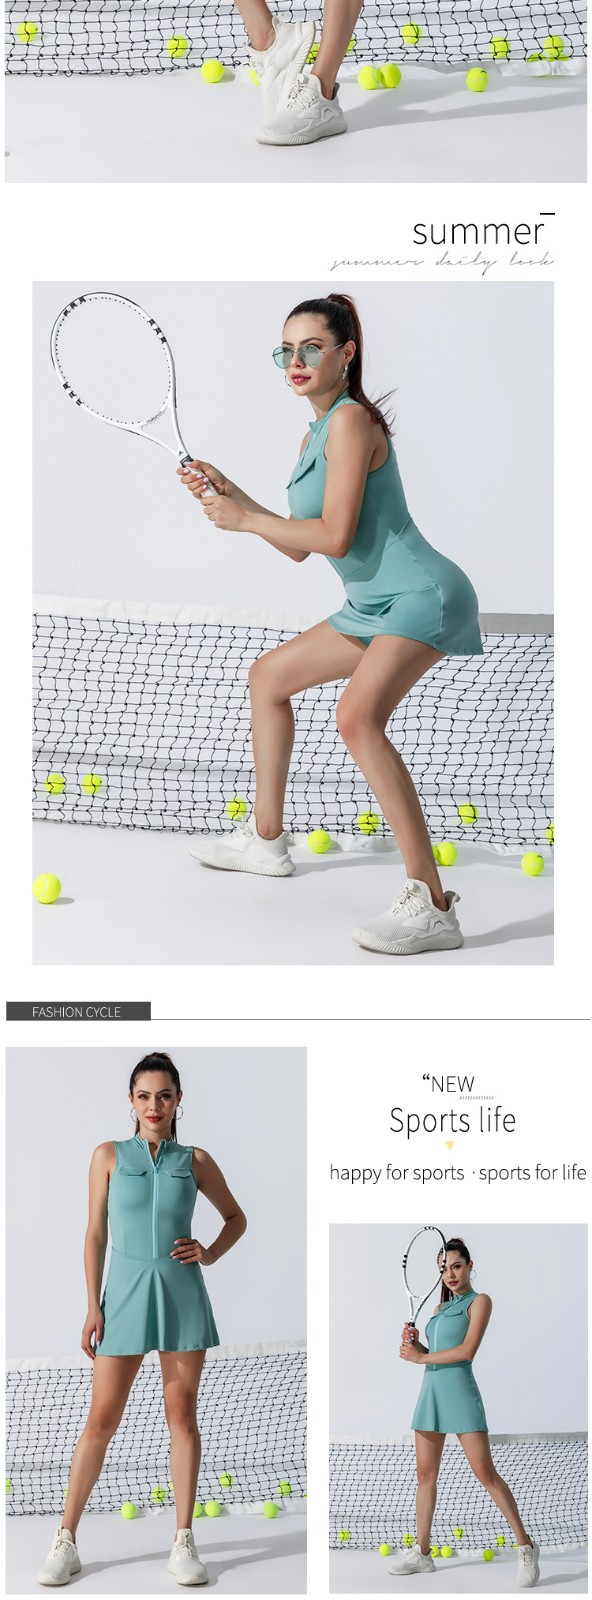 INGOR custom tennis women clothes solutions-5